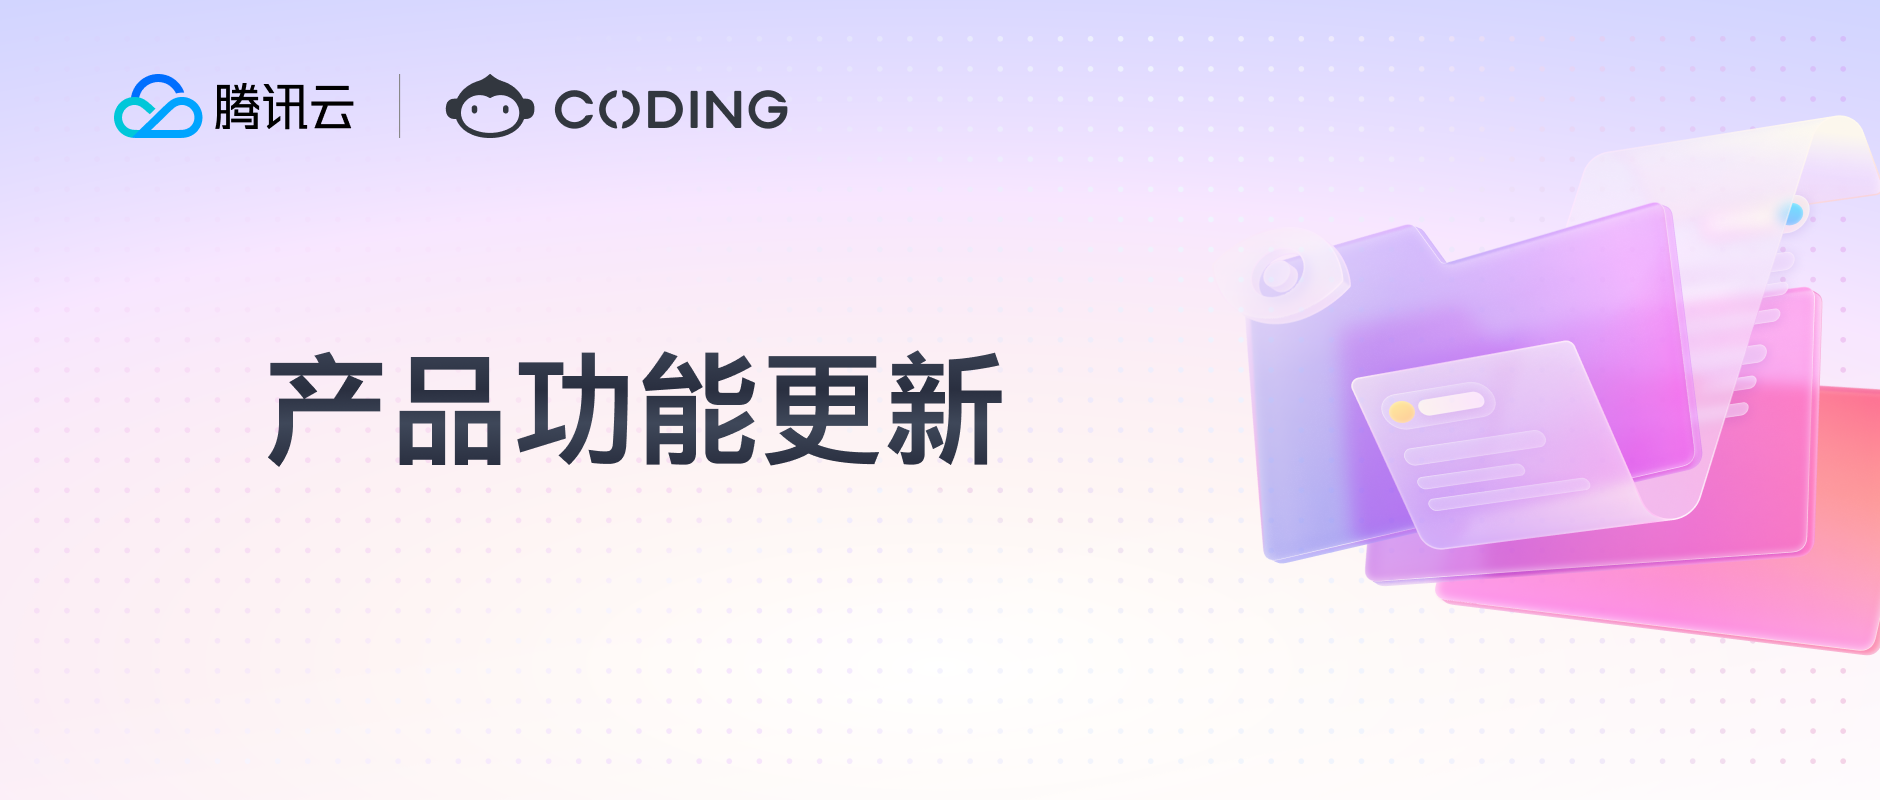 CODING 界面全新升级，代码仓库 Rebase 变基合并、批量复制事项等功能上线！